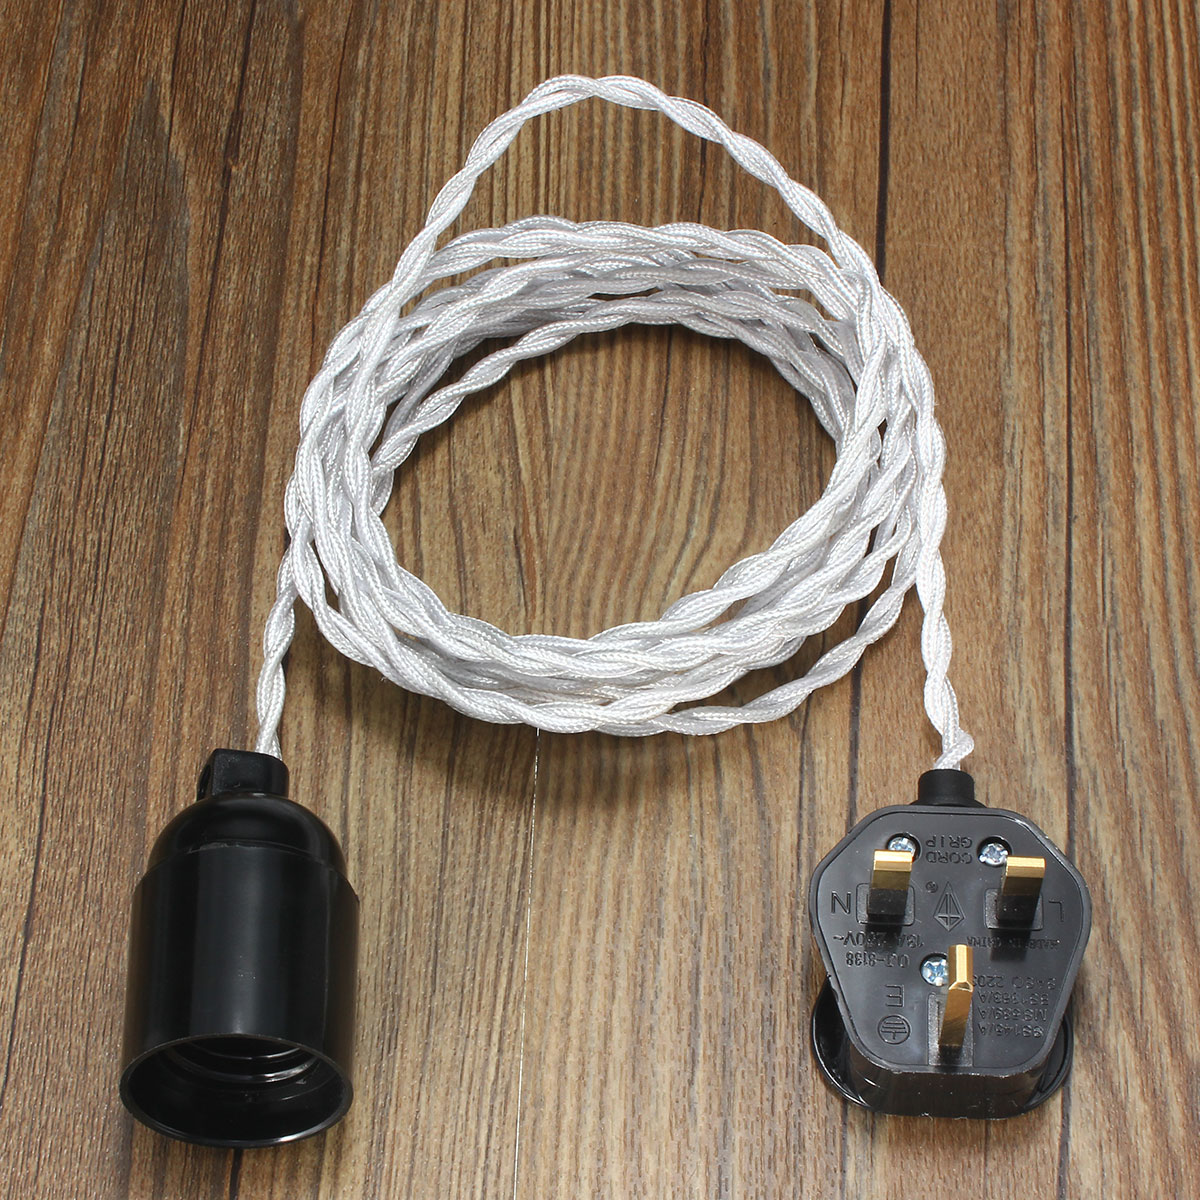 3M-E27-Vintage-Twisted-Fabric-Cable-UK-Plug-In-Pendant-Lamp-Light-Bulb-Holder-Socket-1068749-6